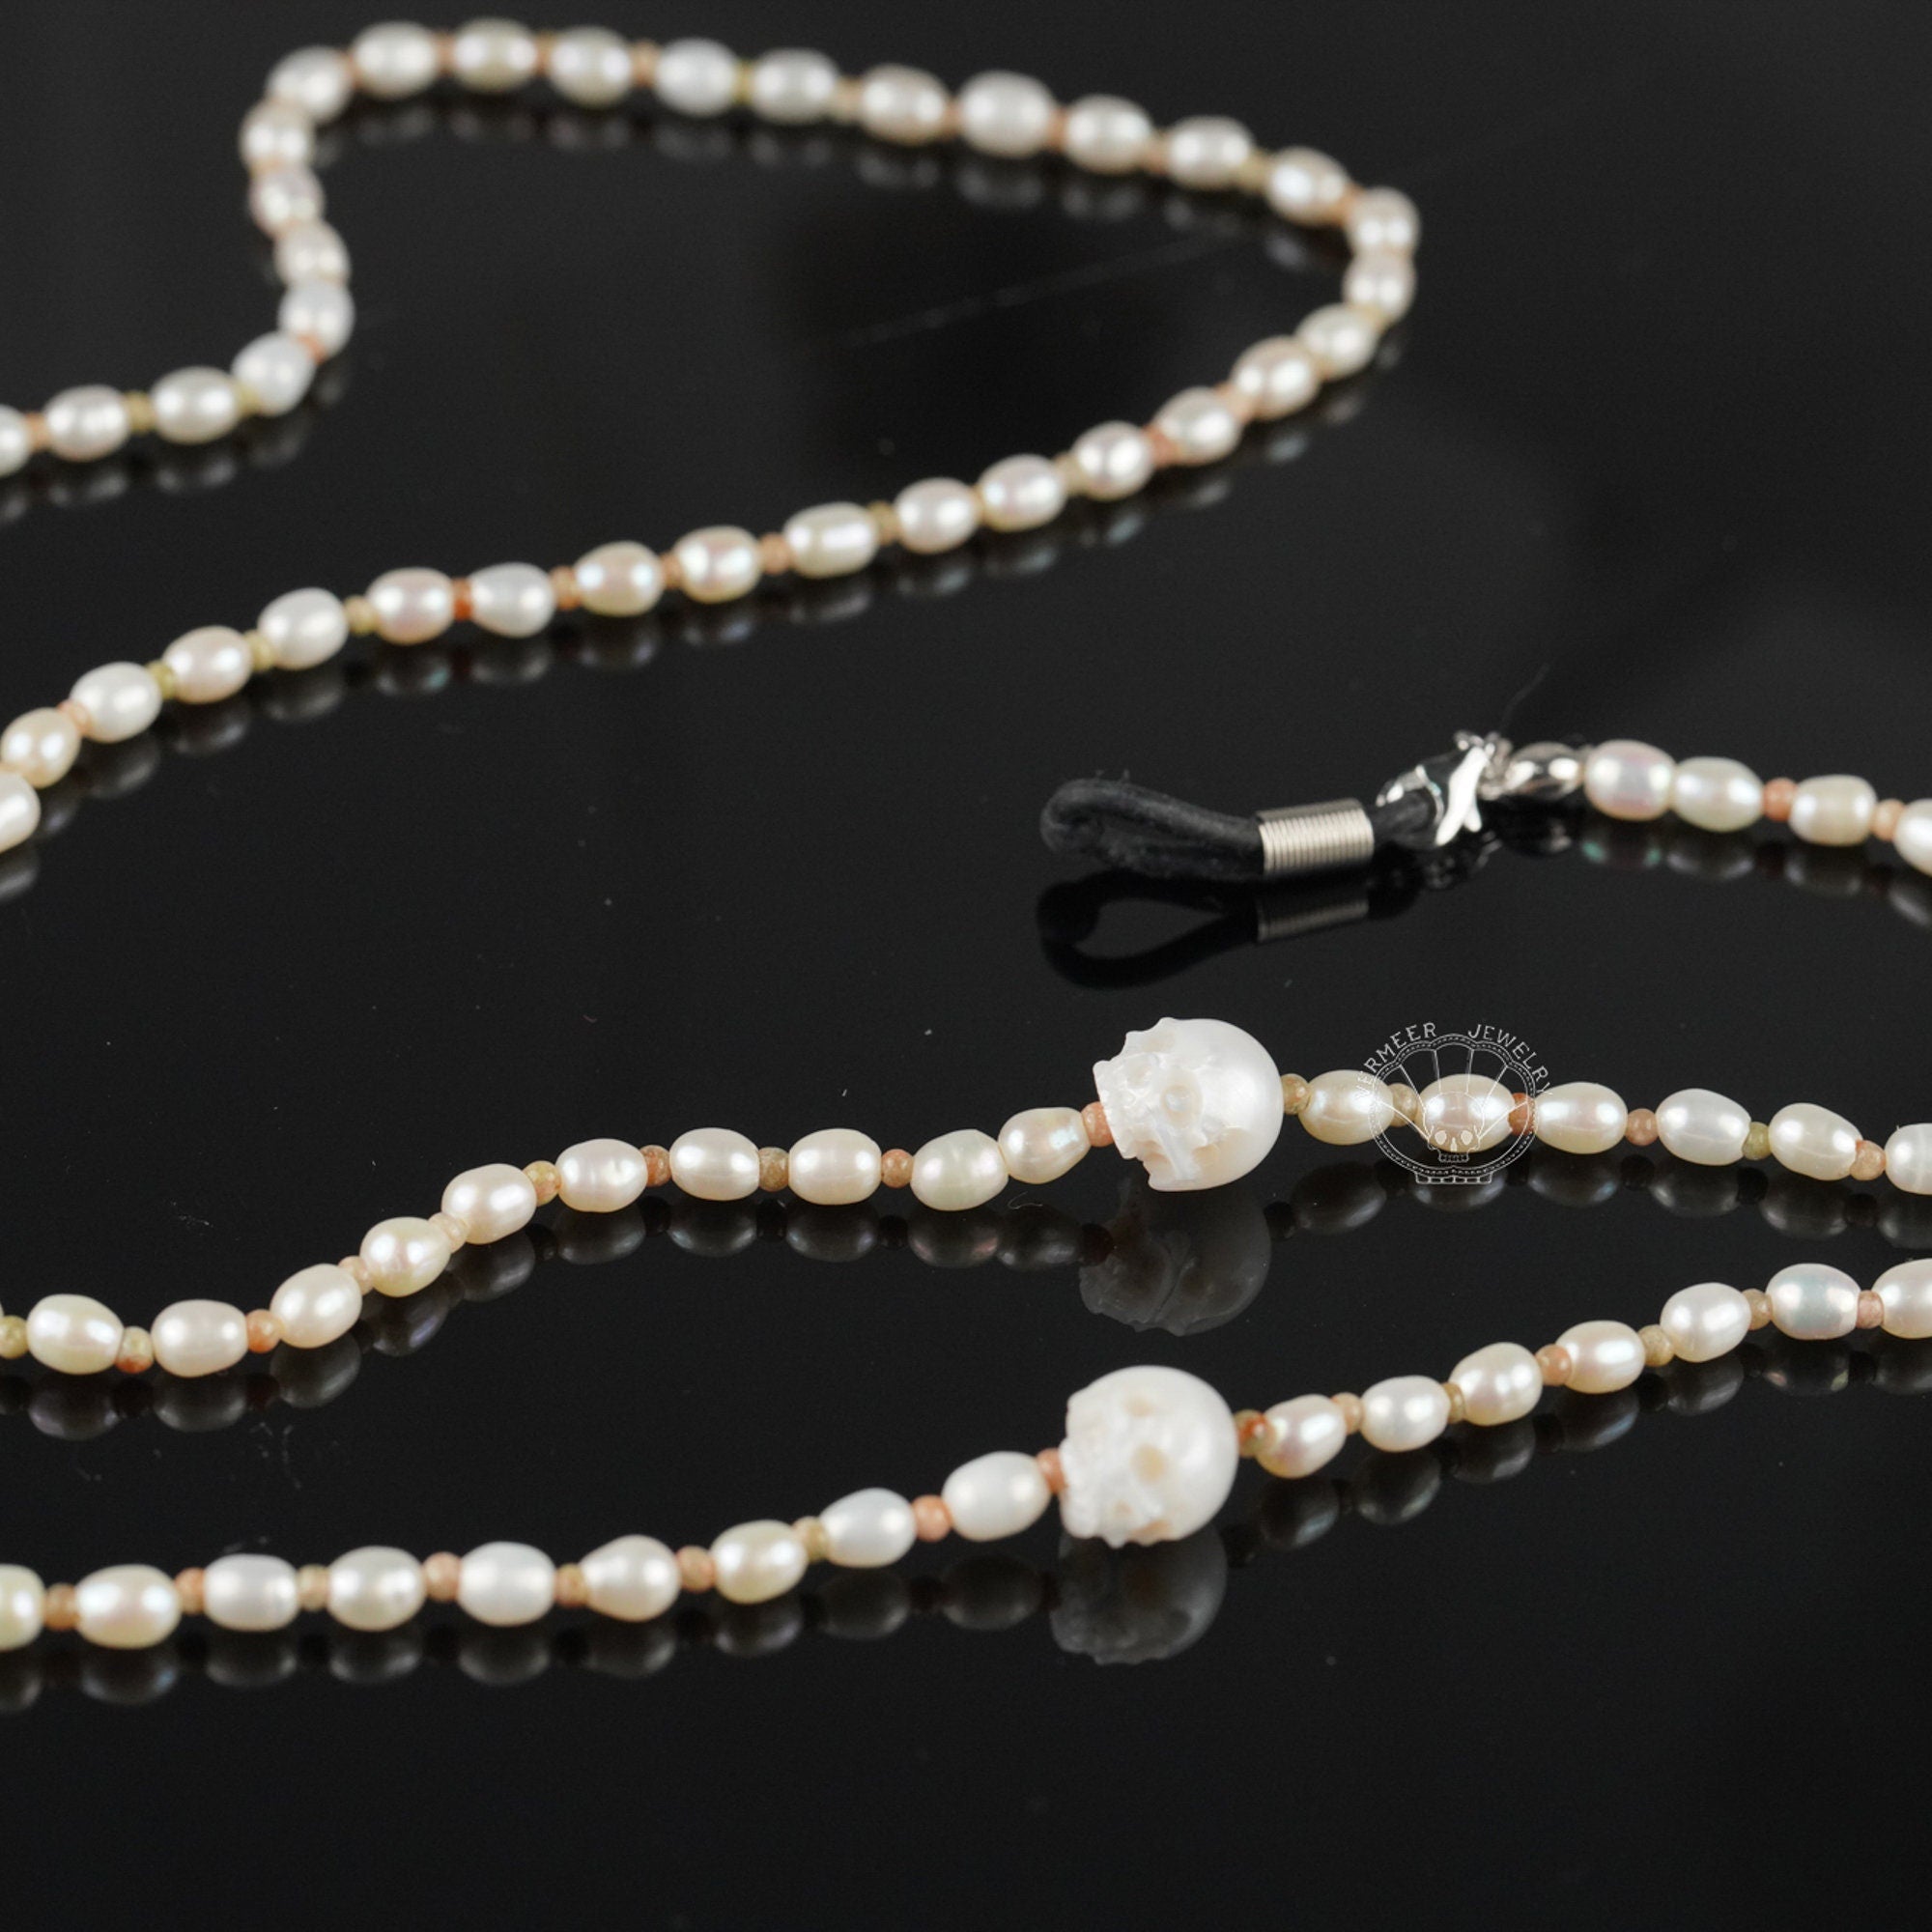 glass chain skull carved pearl Glasses freshwater pearl eyeglasses cord gift for lover